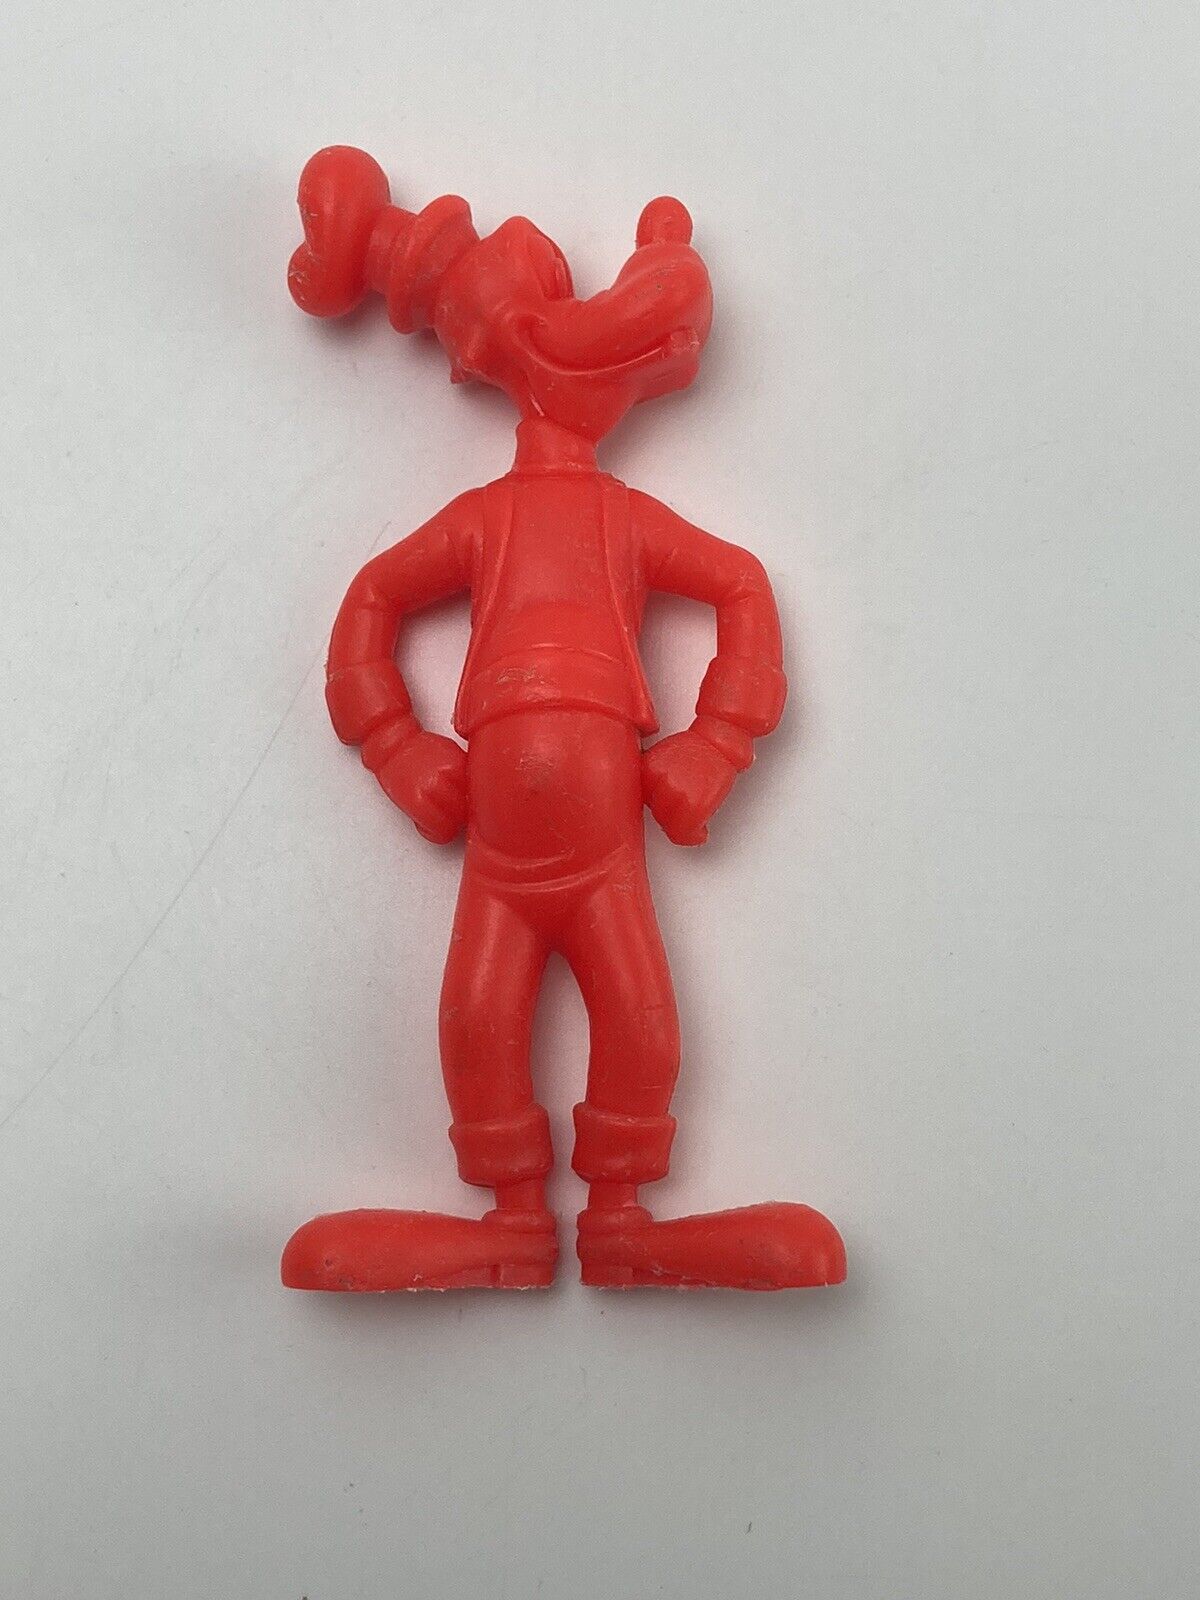 1971 Vintage Marx Disney Red Goofy Plastic Figurine Toy(DAMAGED)